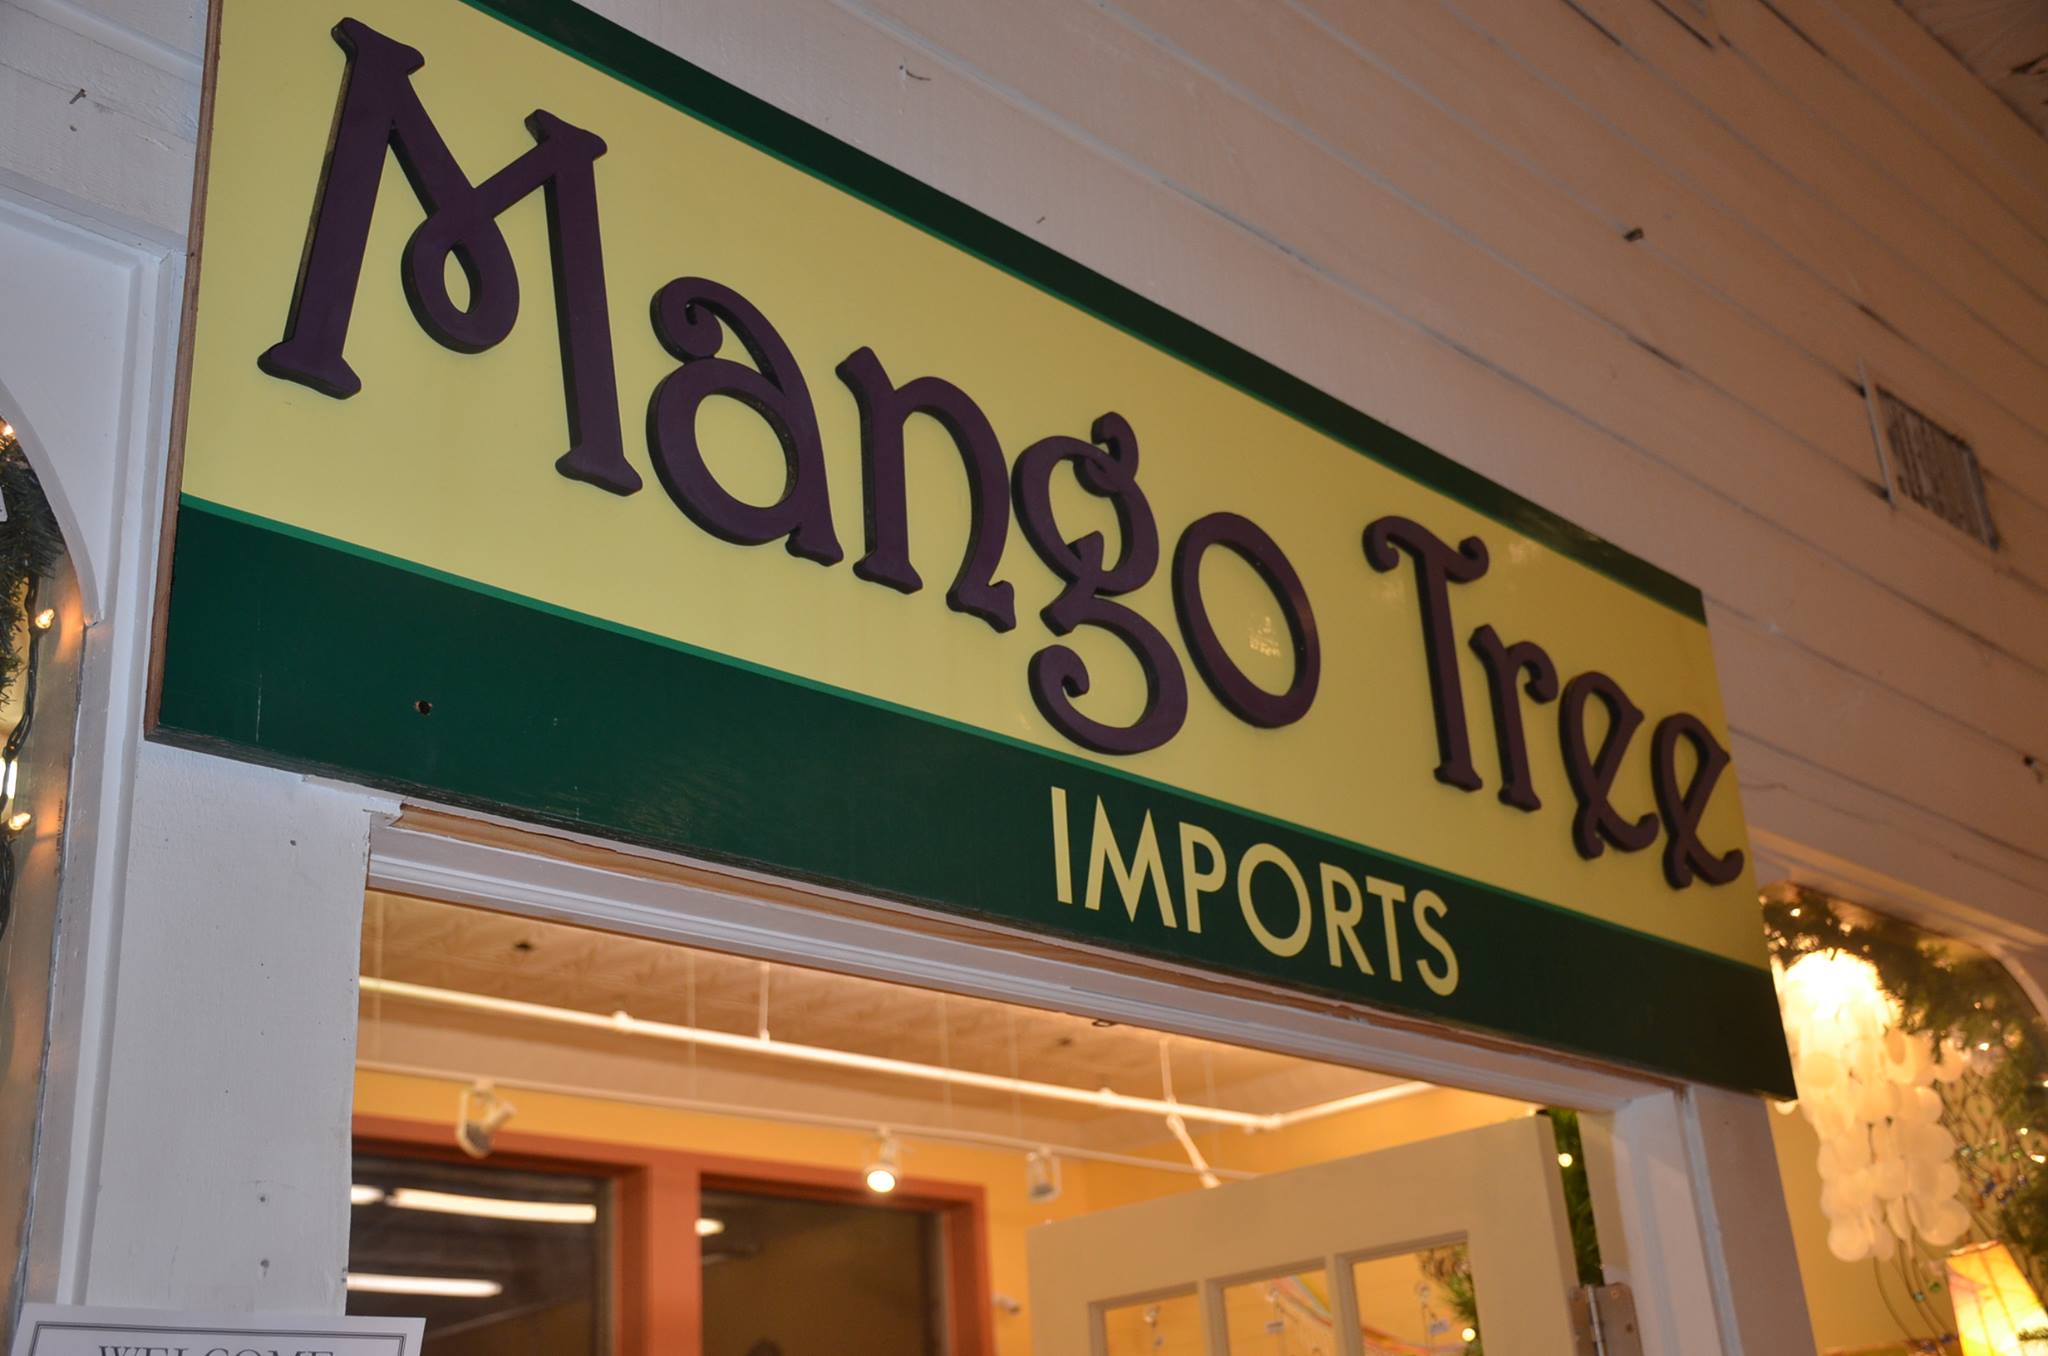 Mango Tree Imports